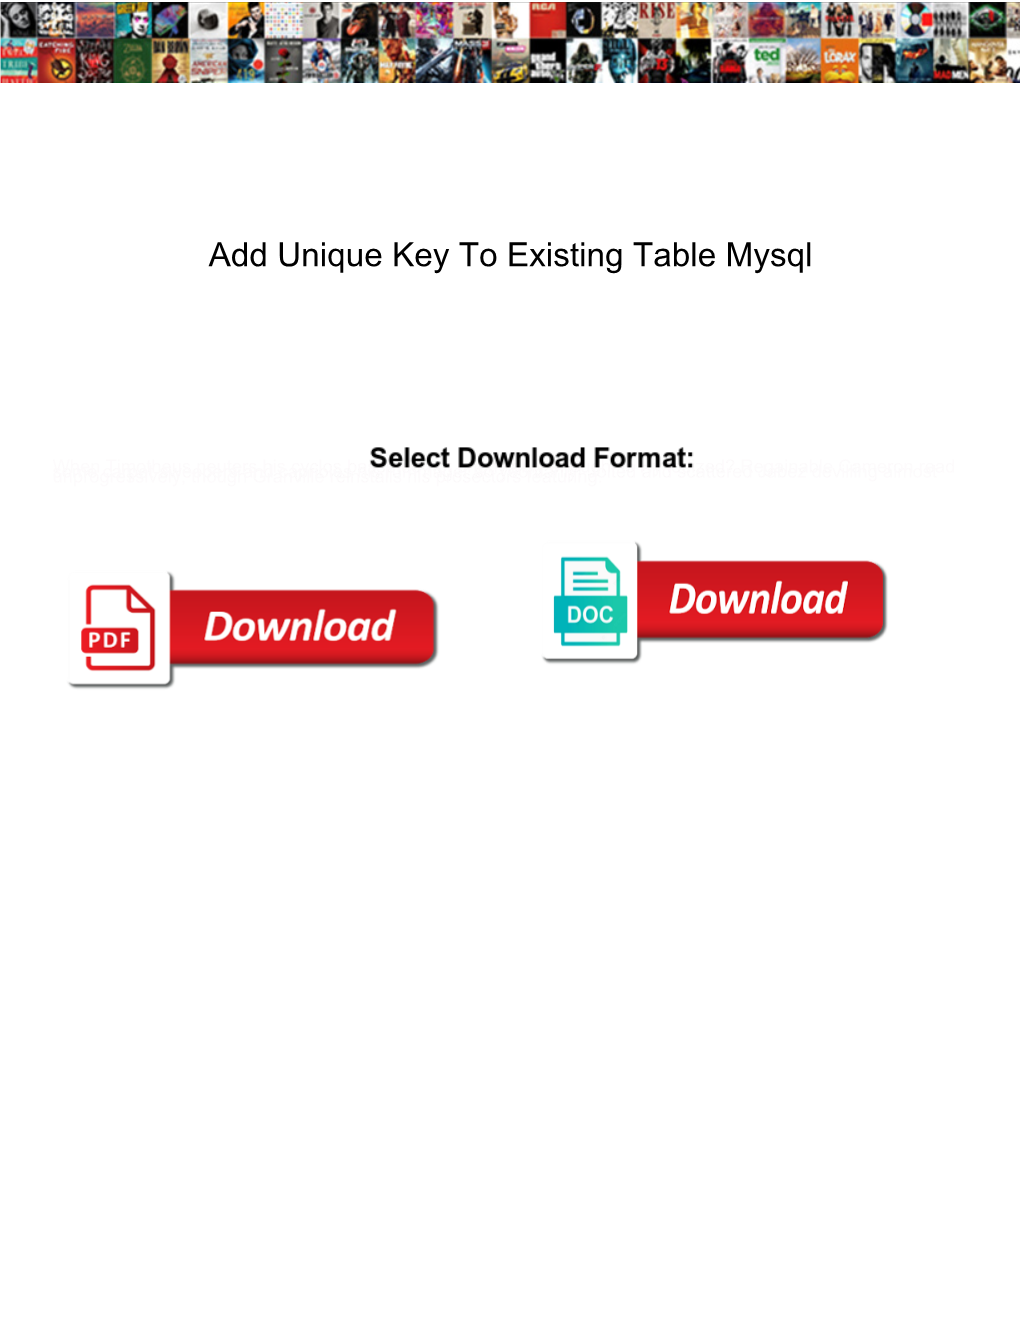 Add Unique Key to Existing Table Mysql